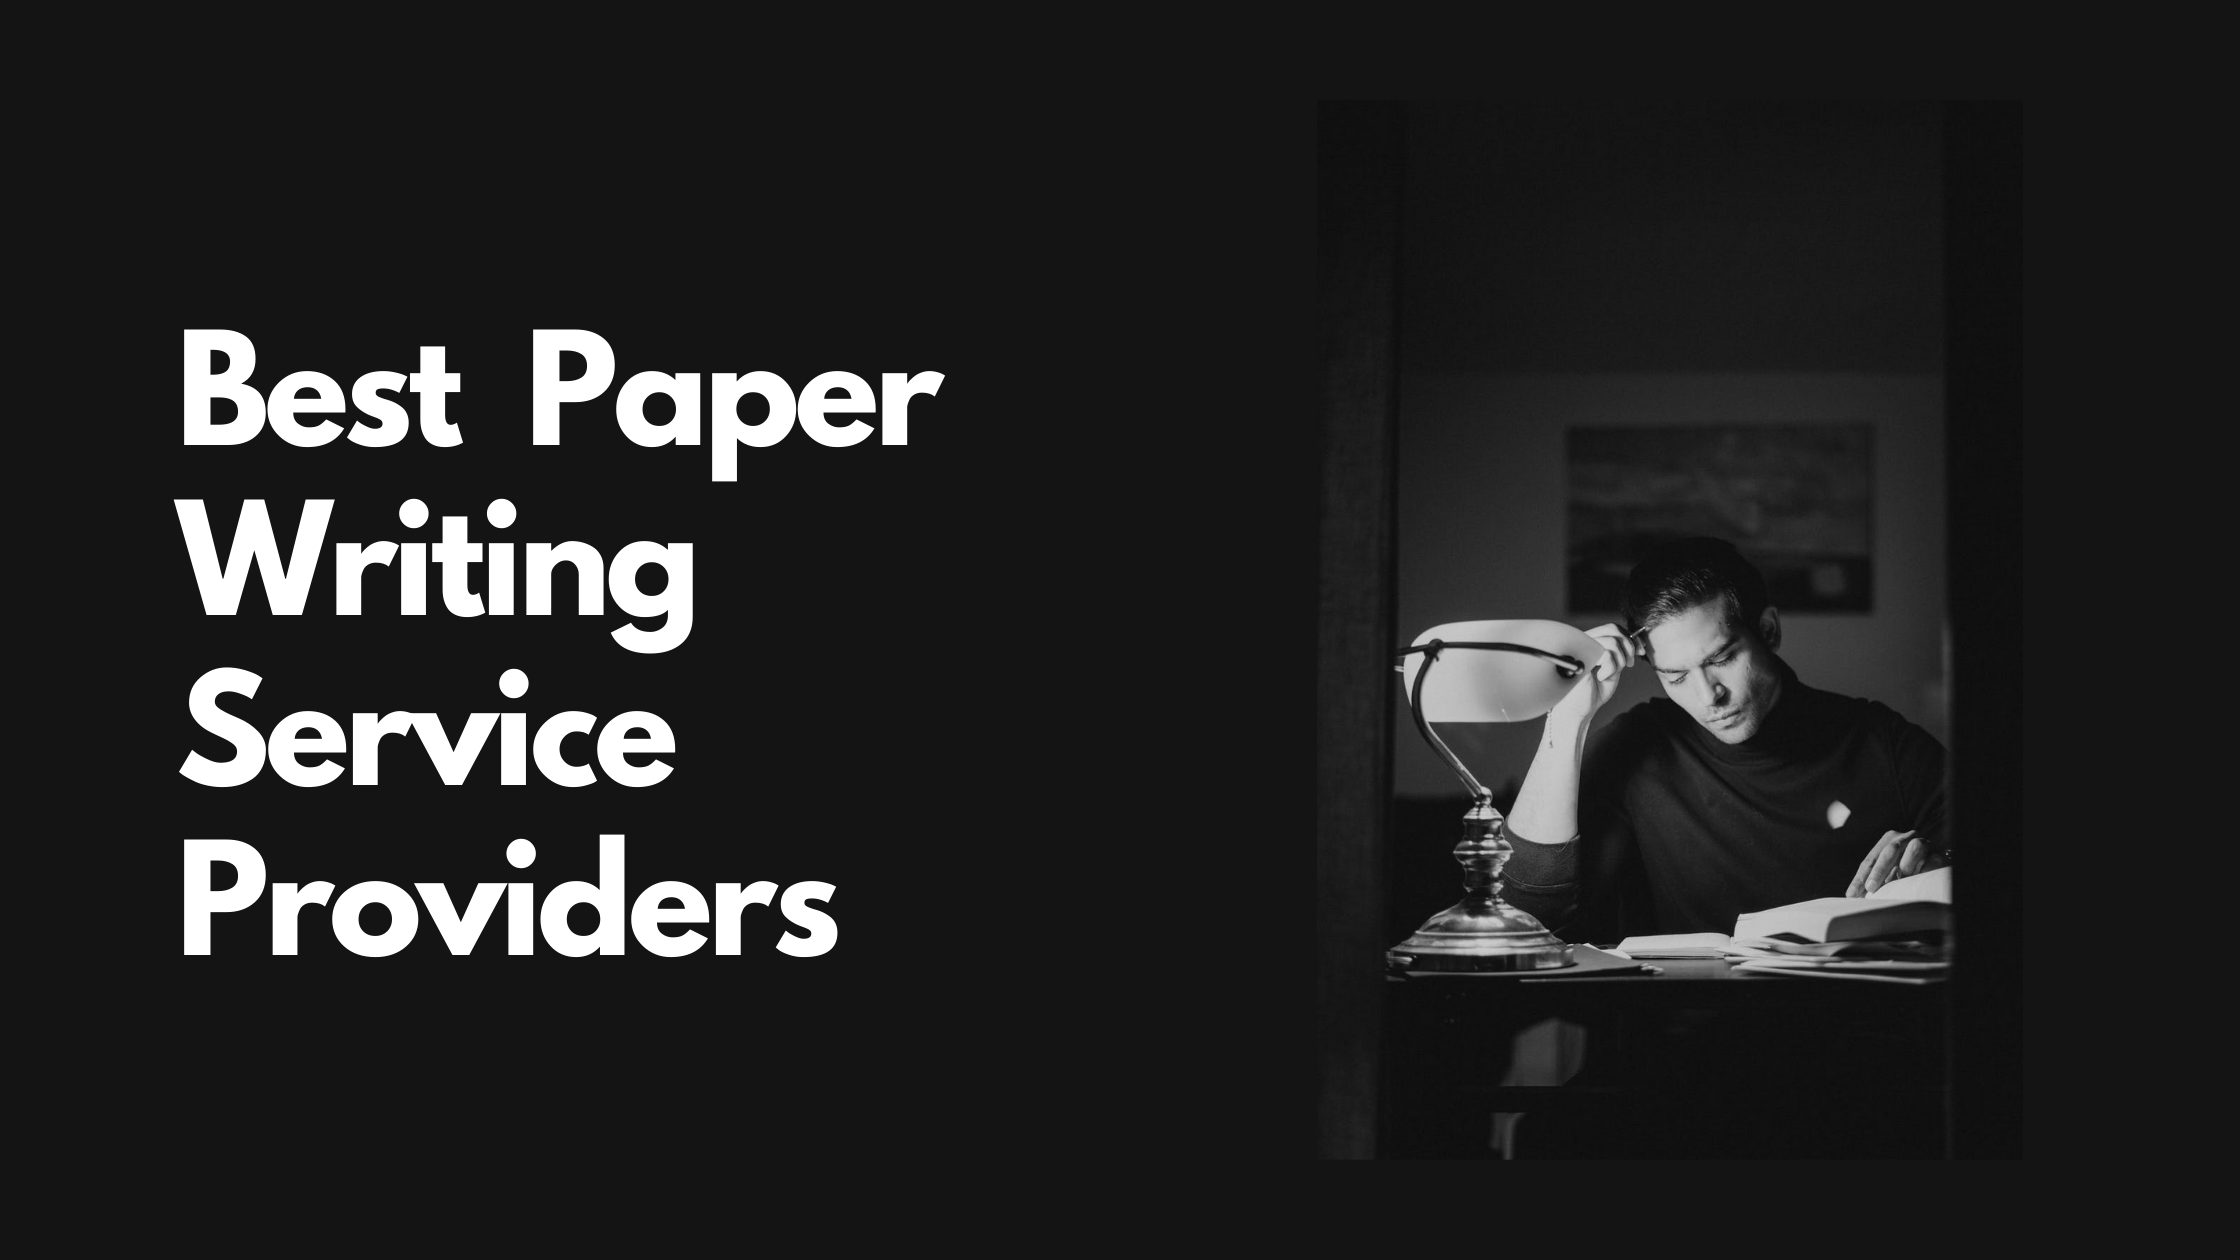 Best-Paper-Writing-Service-Providers-ea91717b